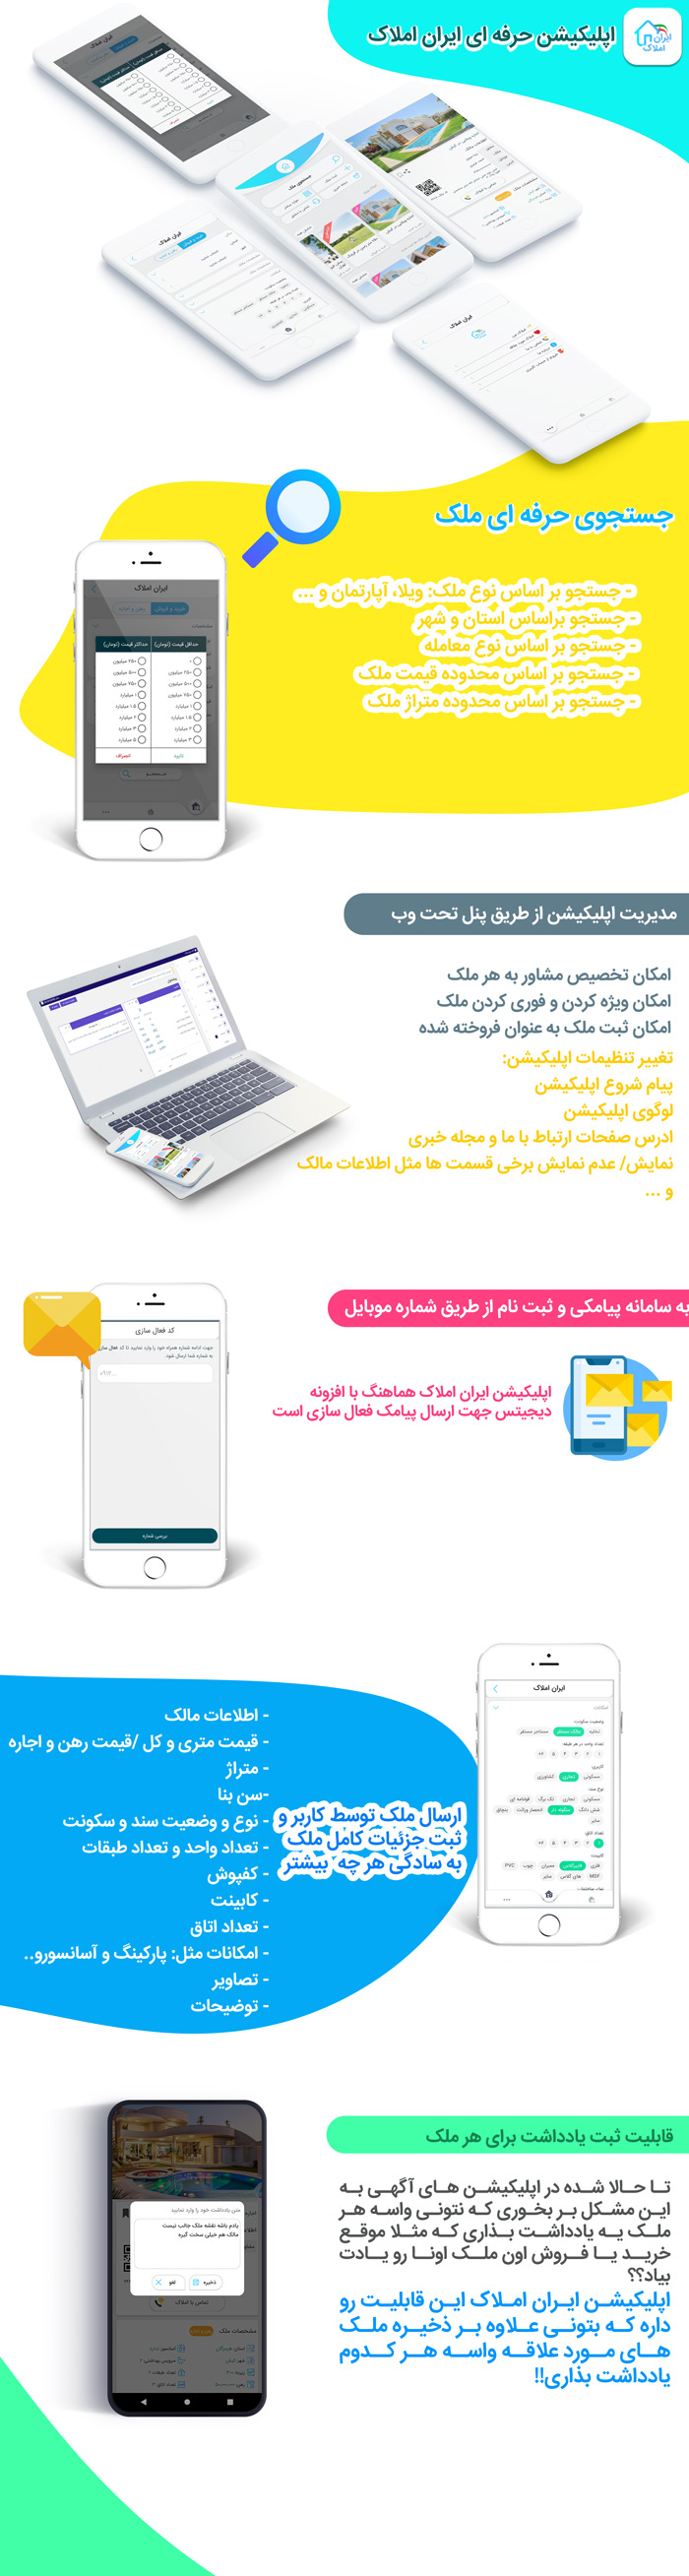 56951 1dc21011f211369aba45afae1 - اپلیکیشن ایران املاک، اپلیکیشن IranAmlak